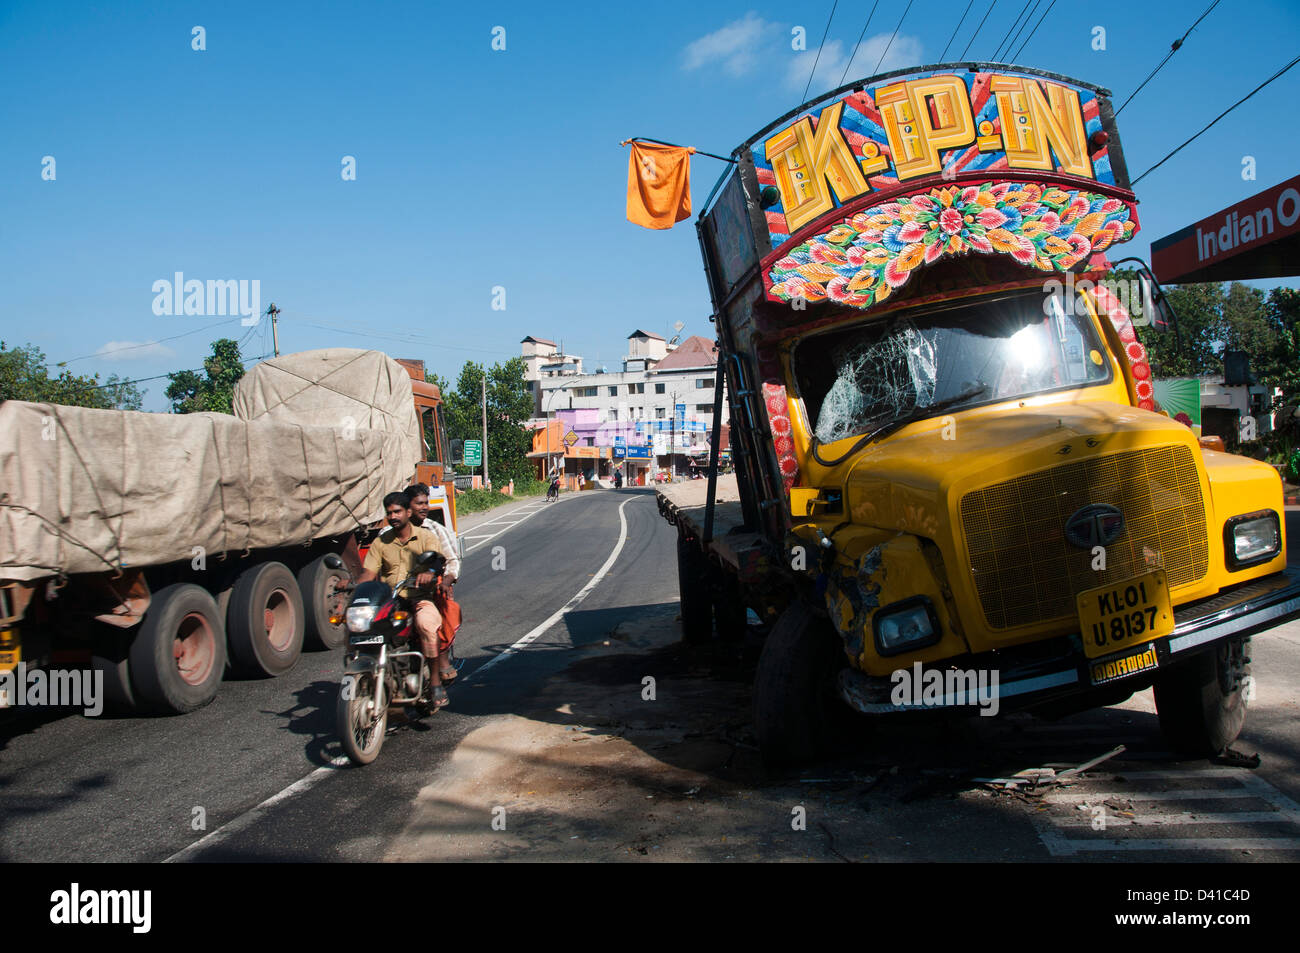 Crashed lorry on Indian roads Stock Photo